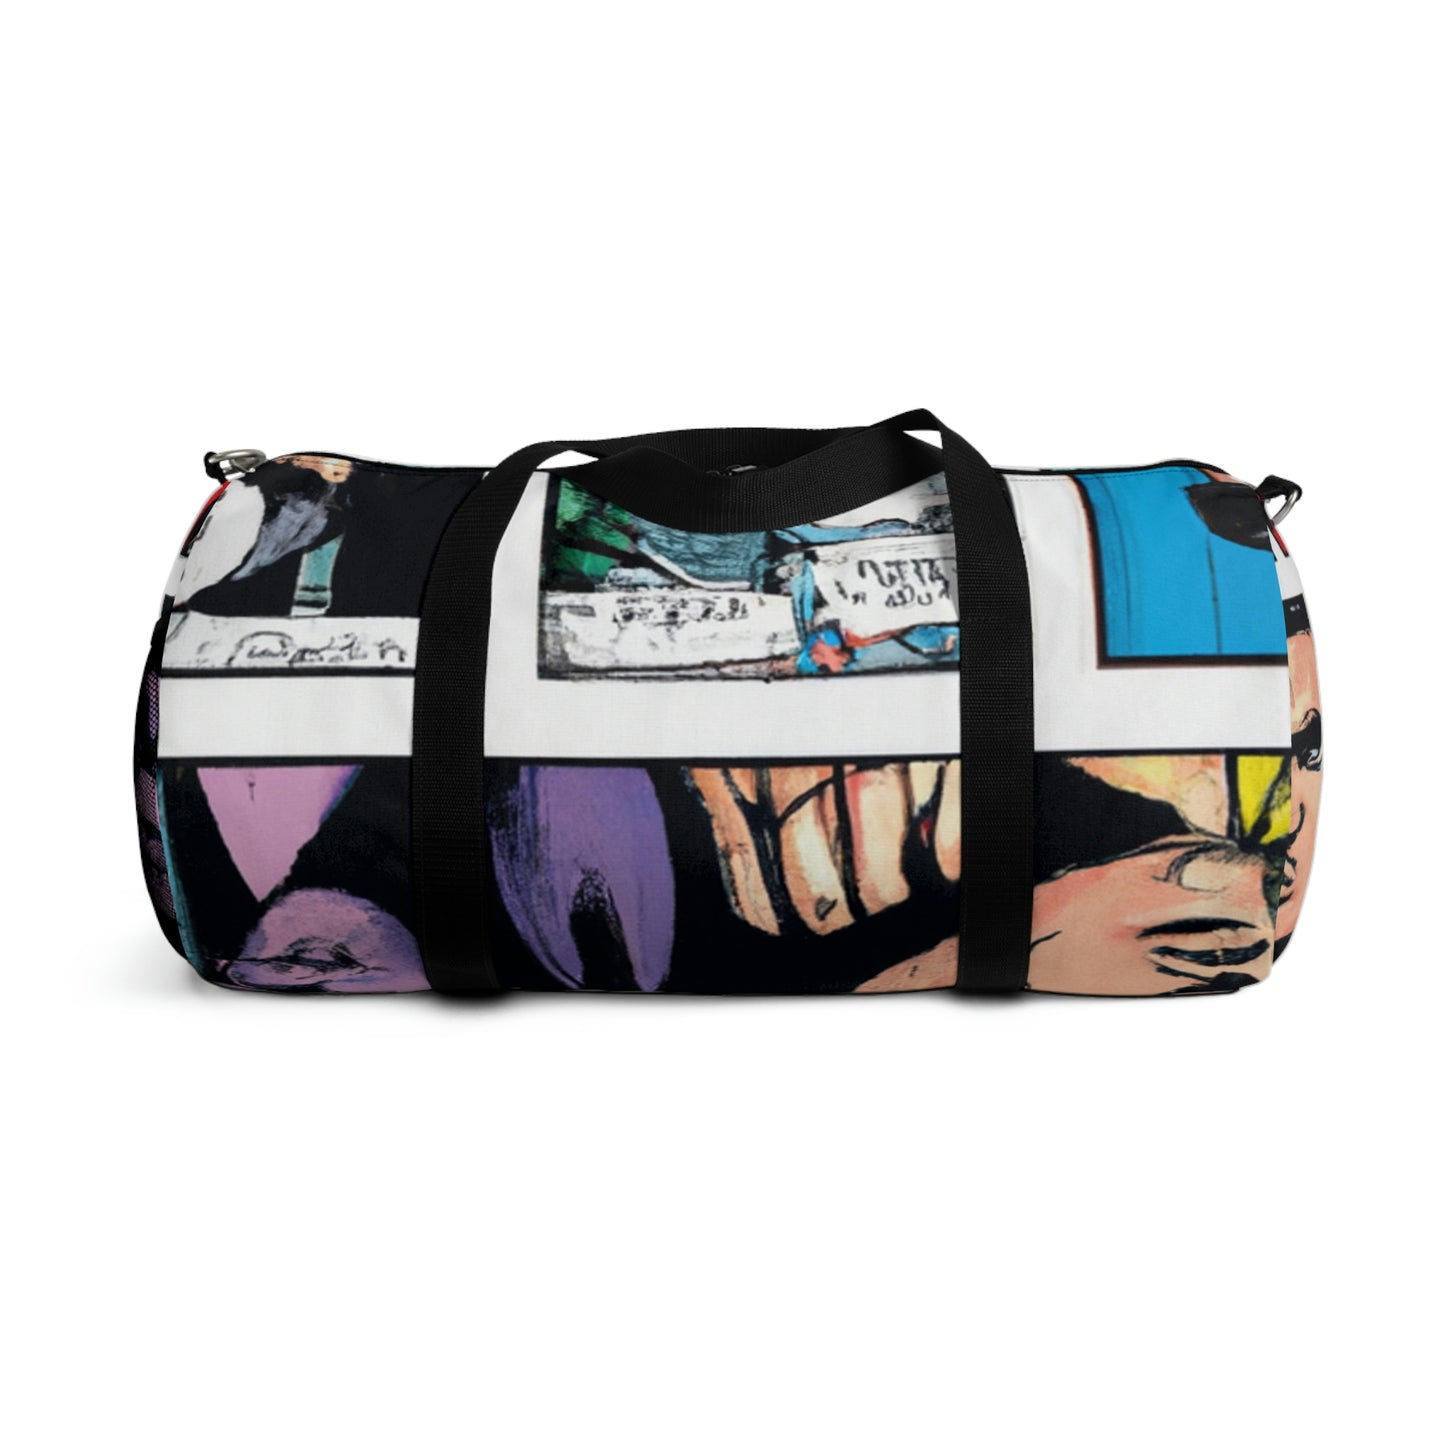 Olivia Pettigrew - Comic Book Duffel Bag